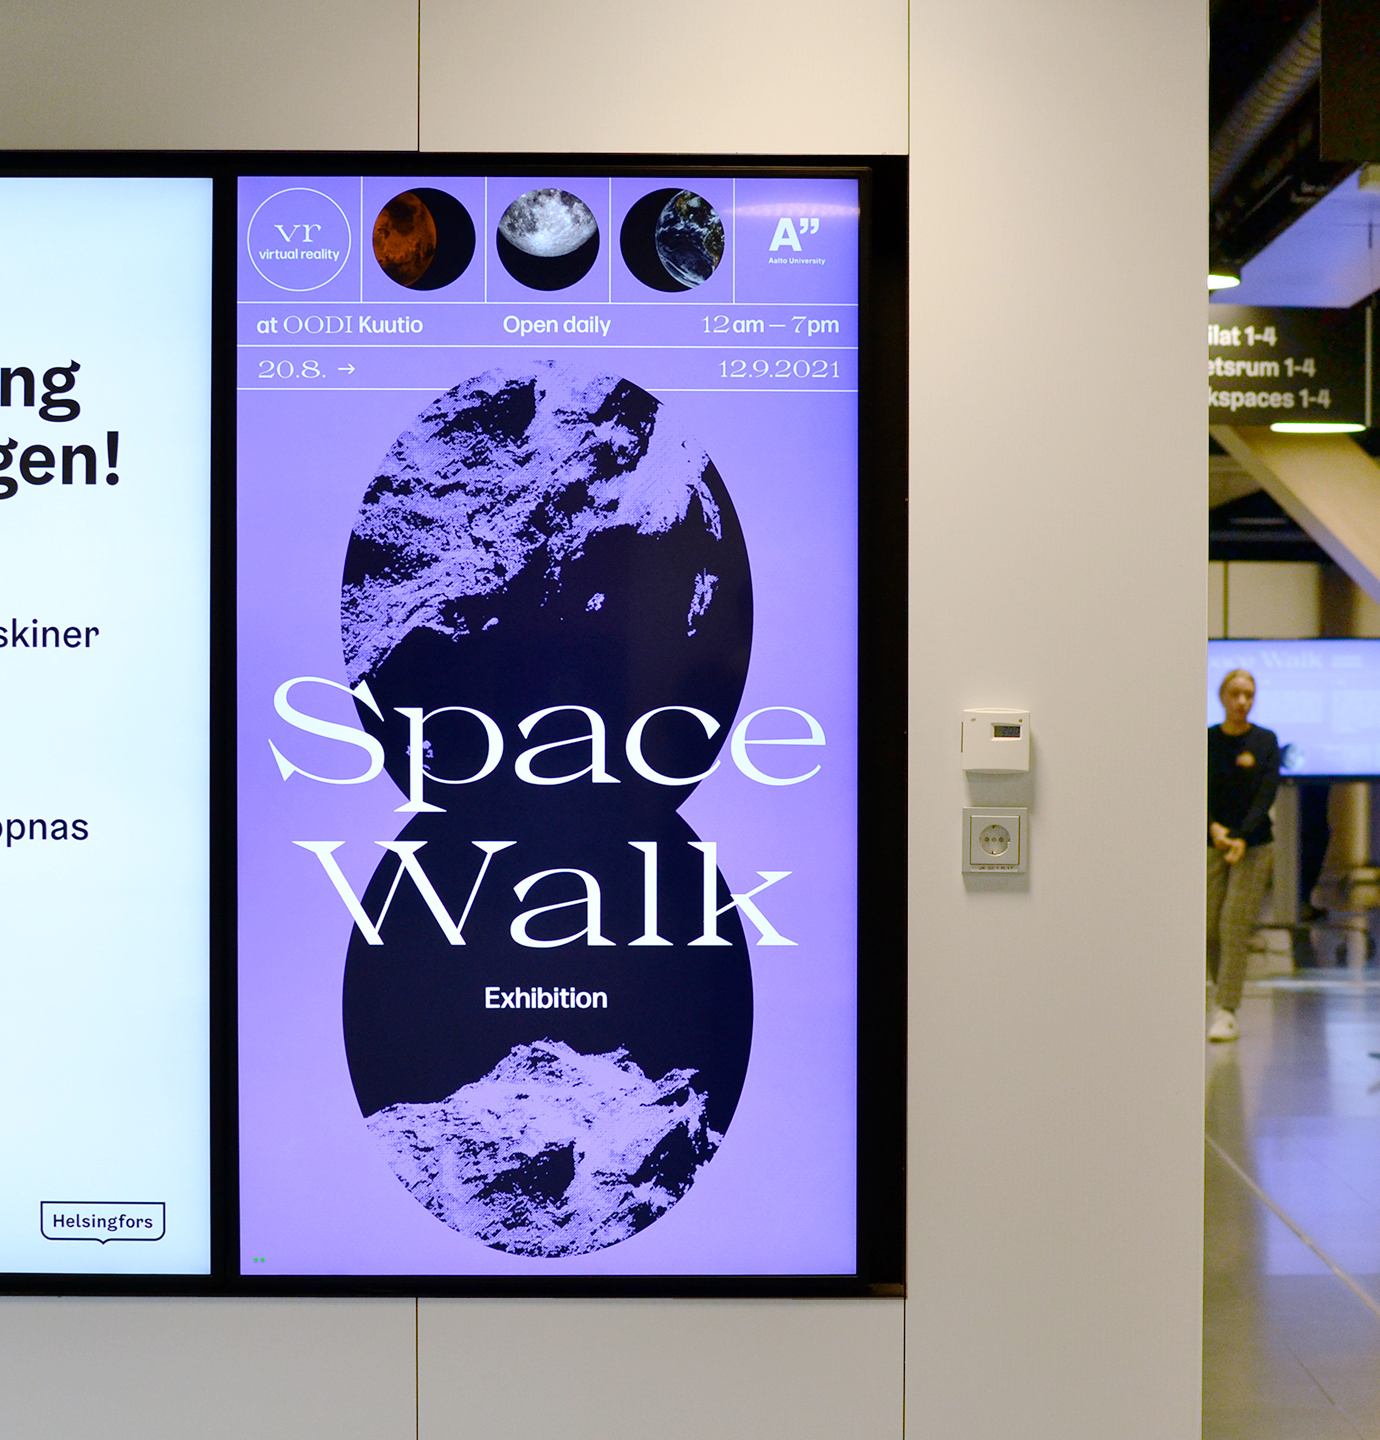 Space Walk Exhibition, OODI Kuutio